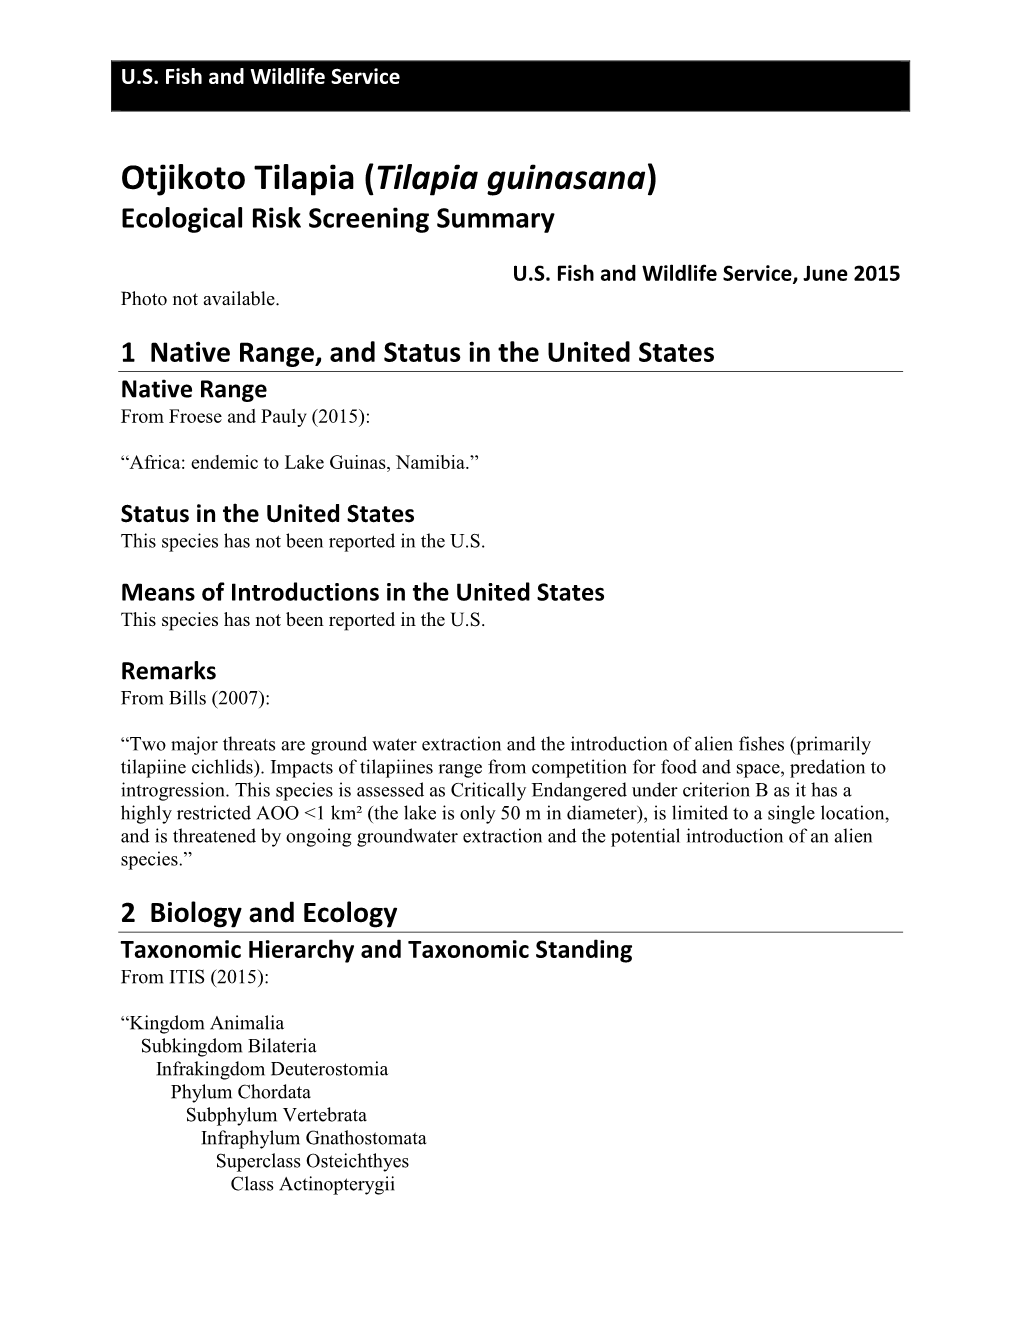 Otjikoto Tilapia (Tilapia Guinasana) Ecological Risk Screening Summary